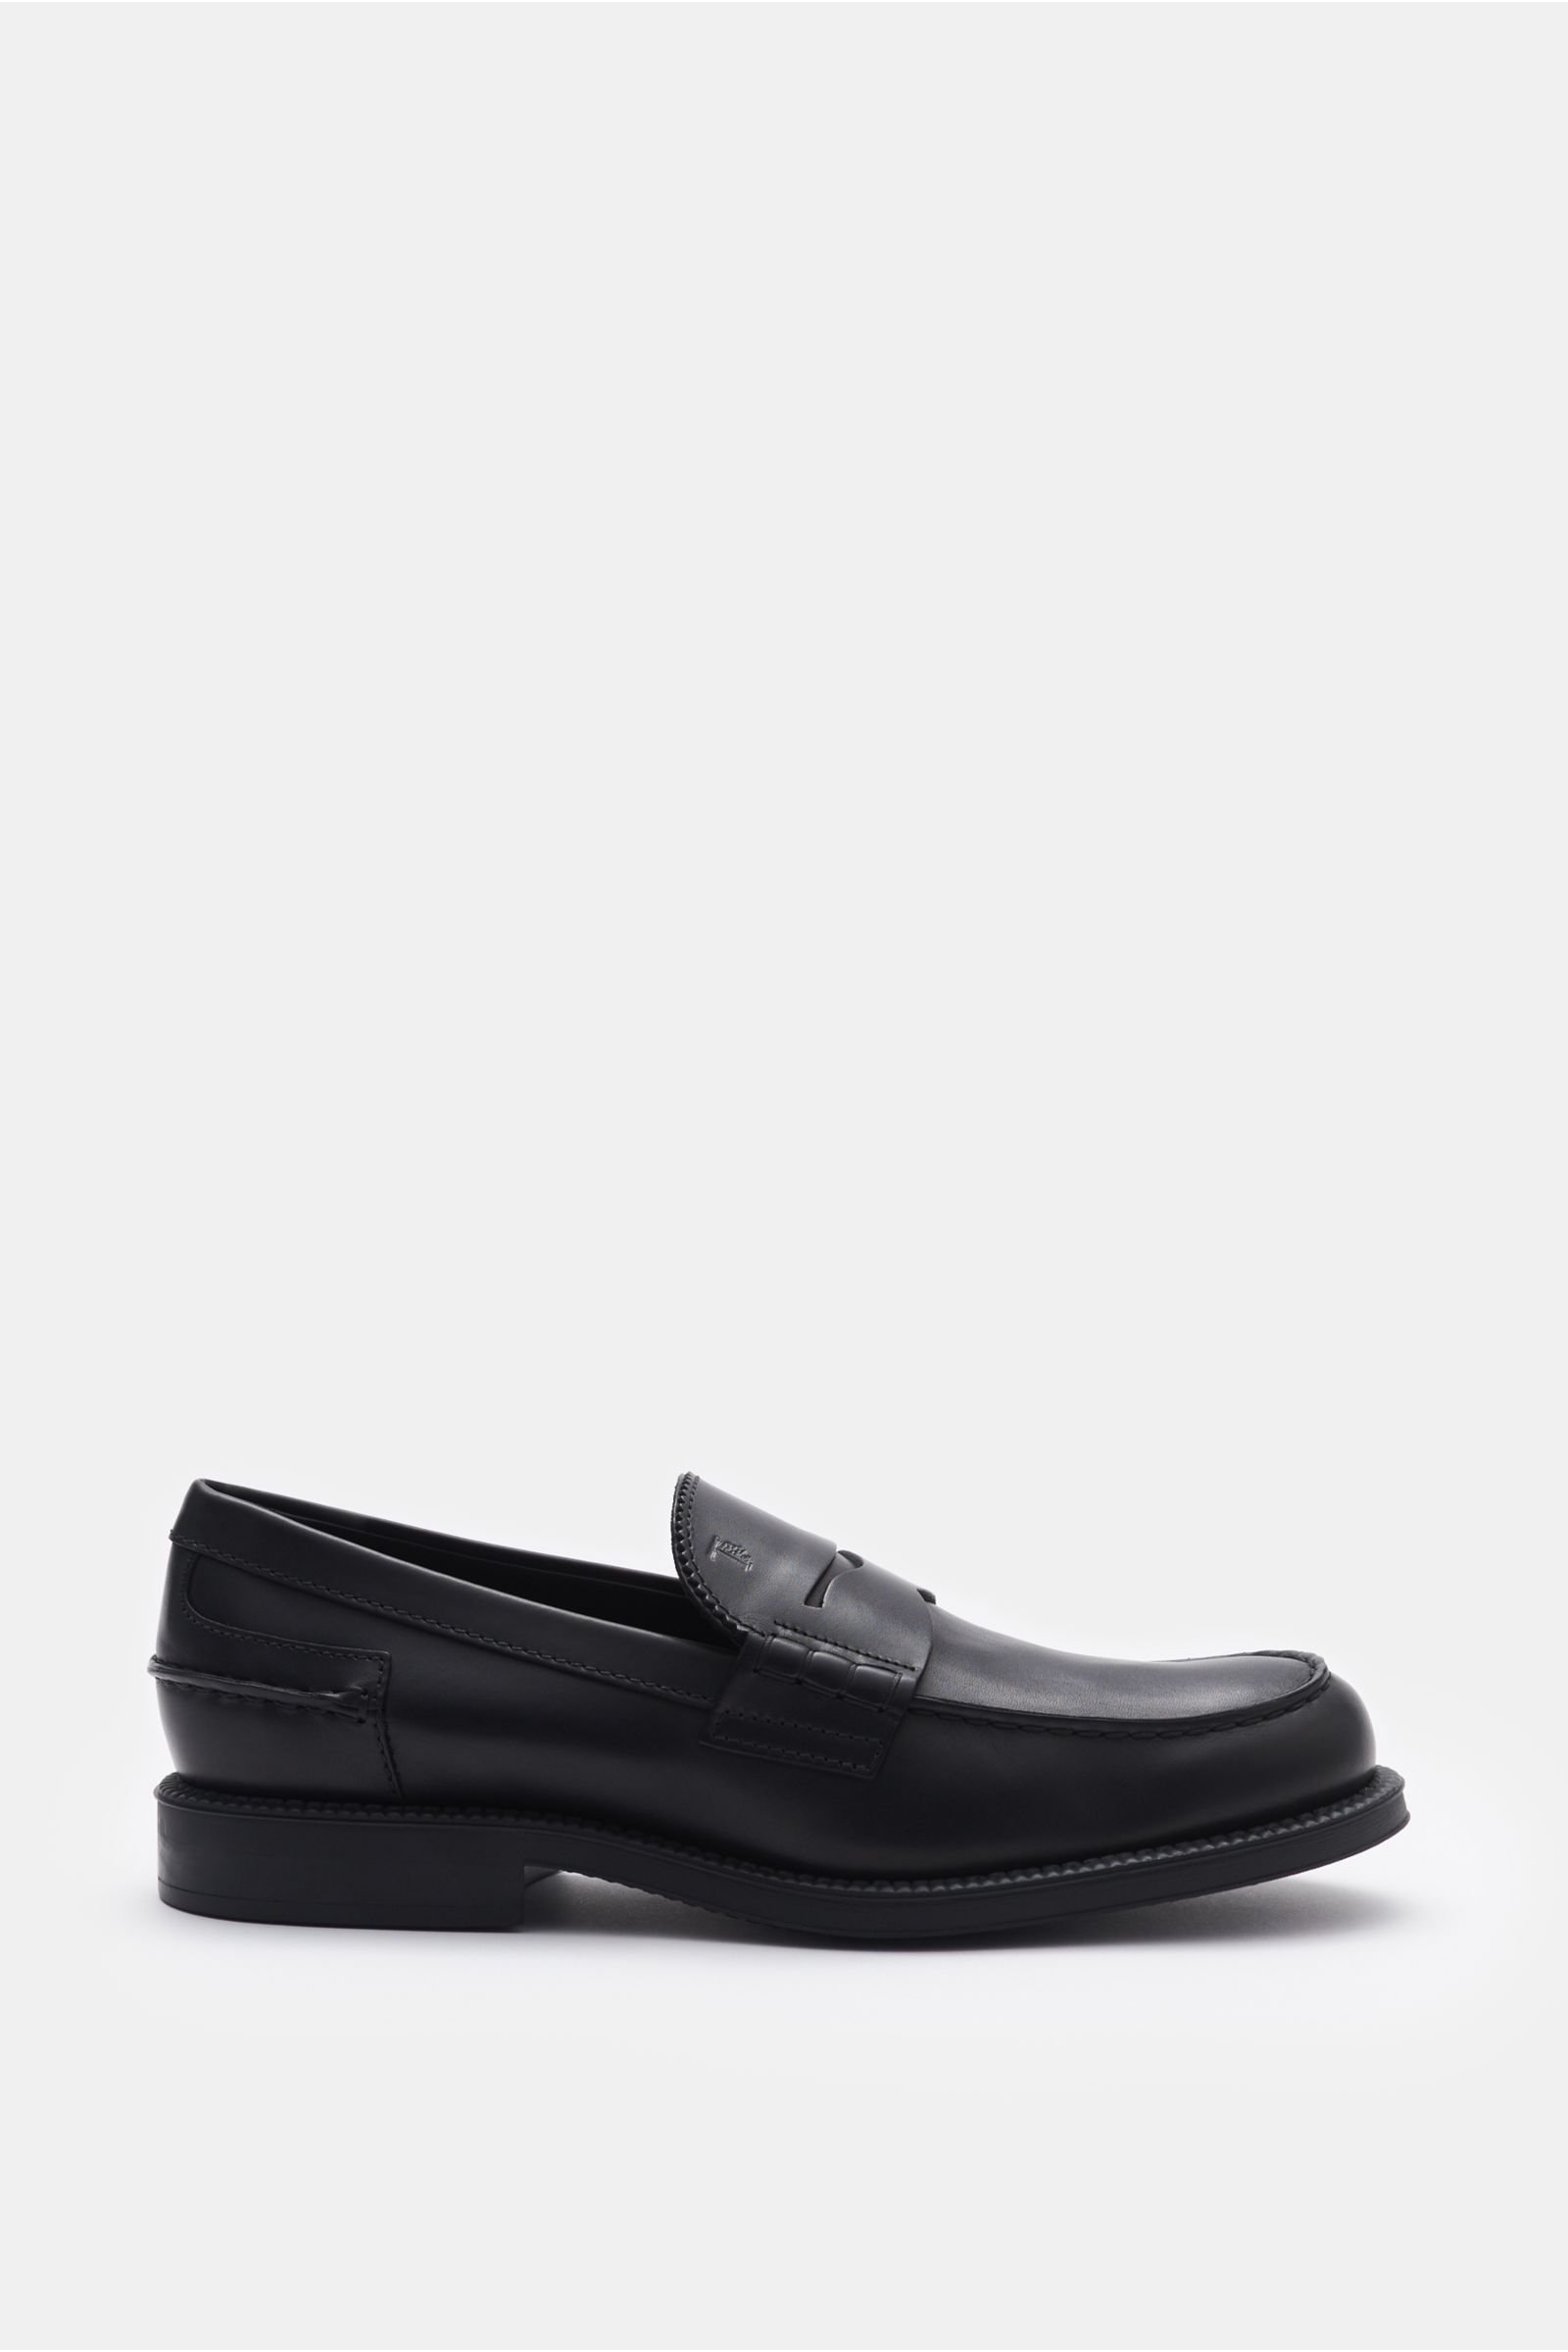 TOD'S penny loafers black | BRAUN Hamburg